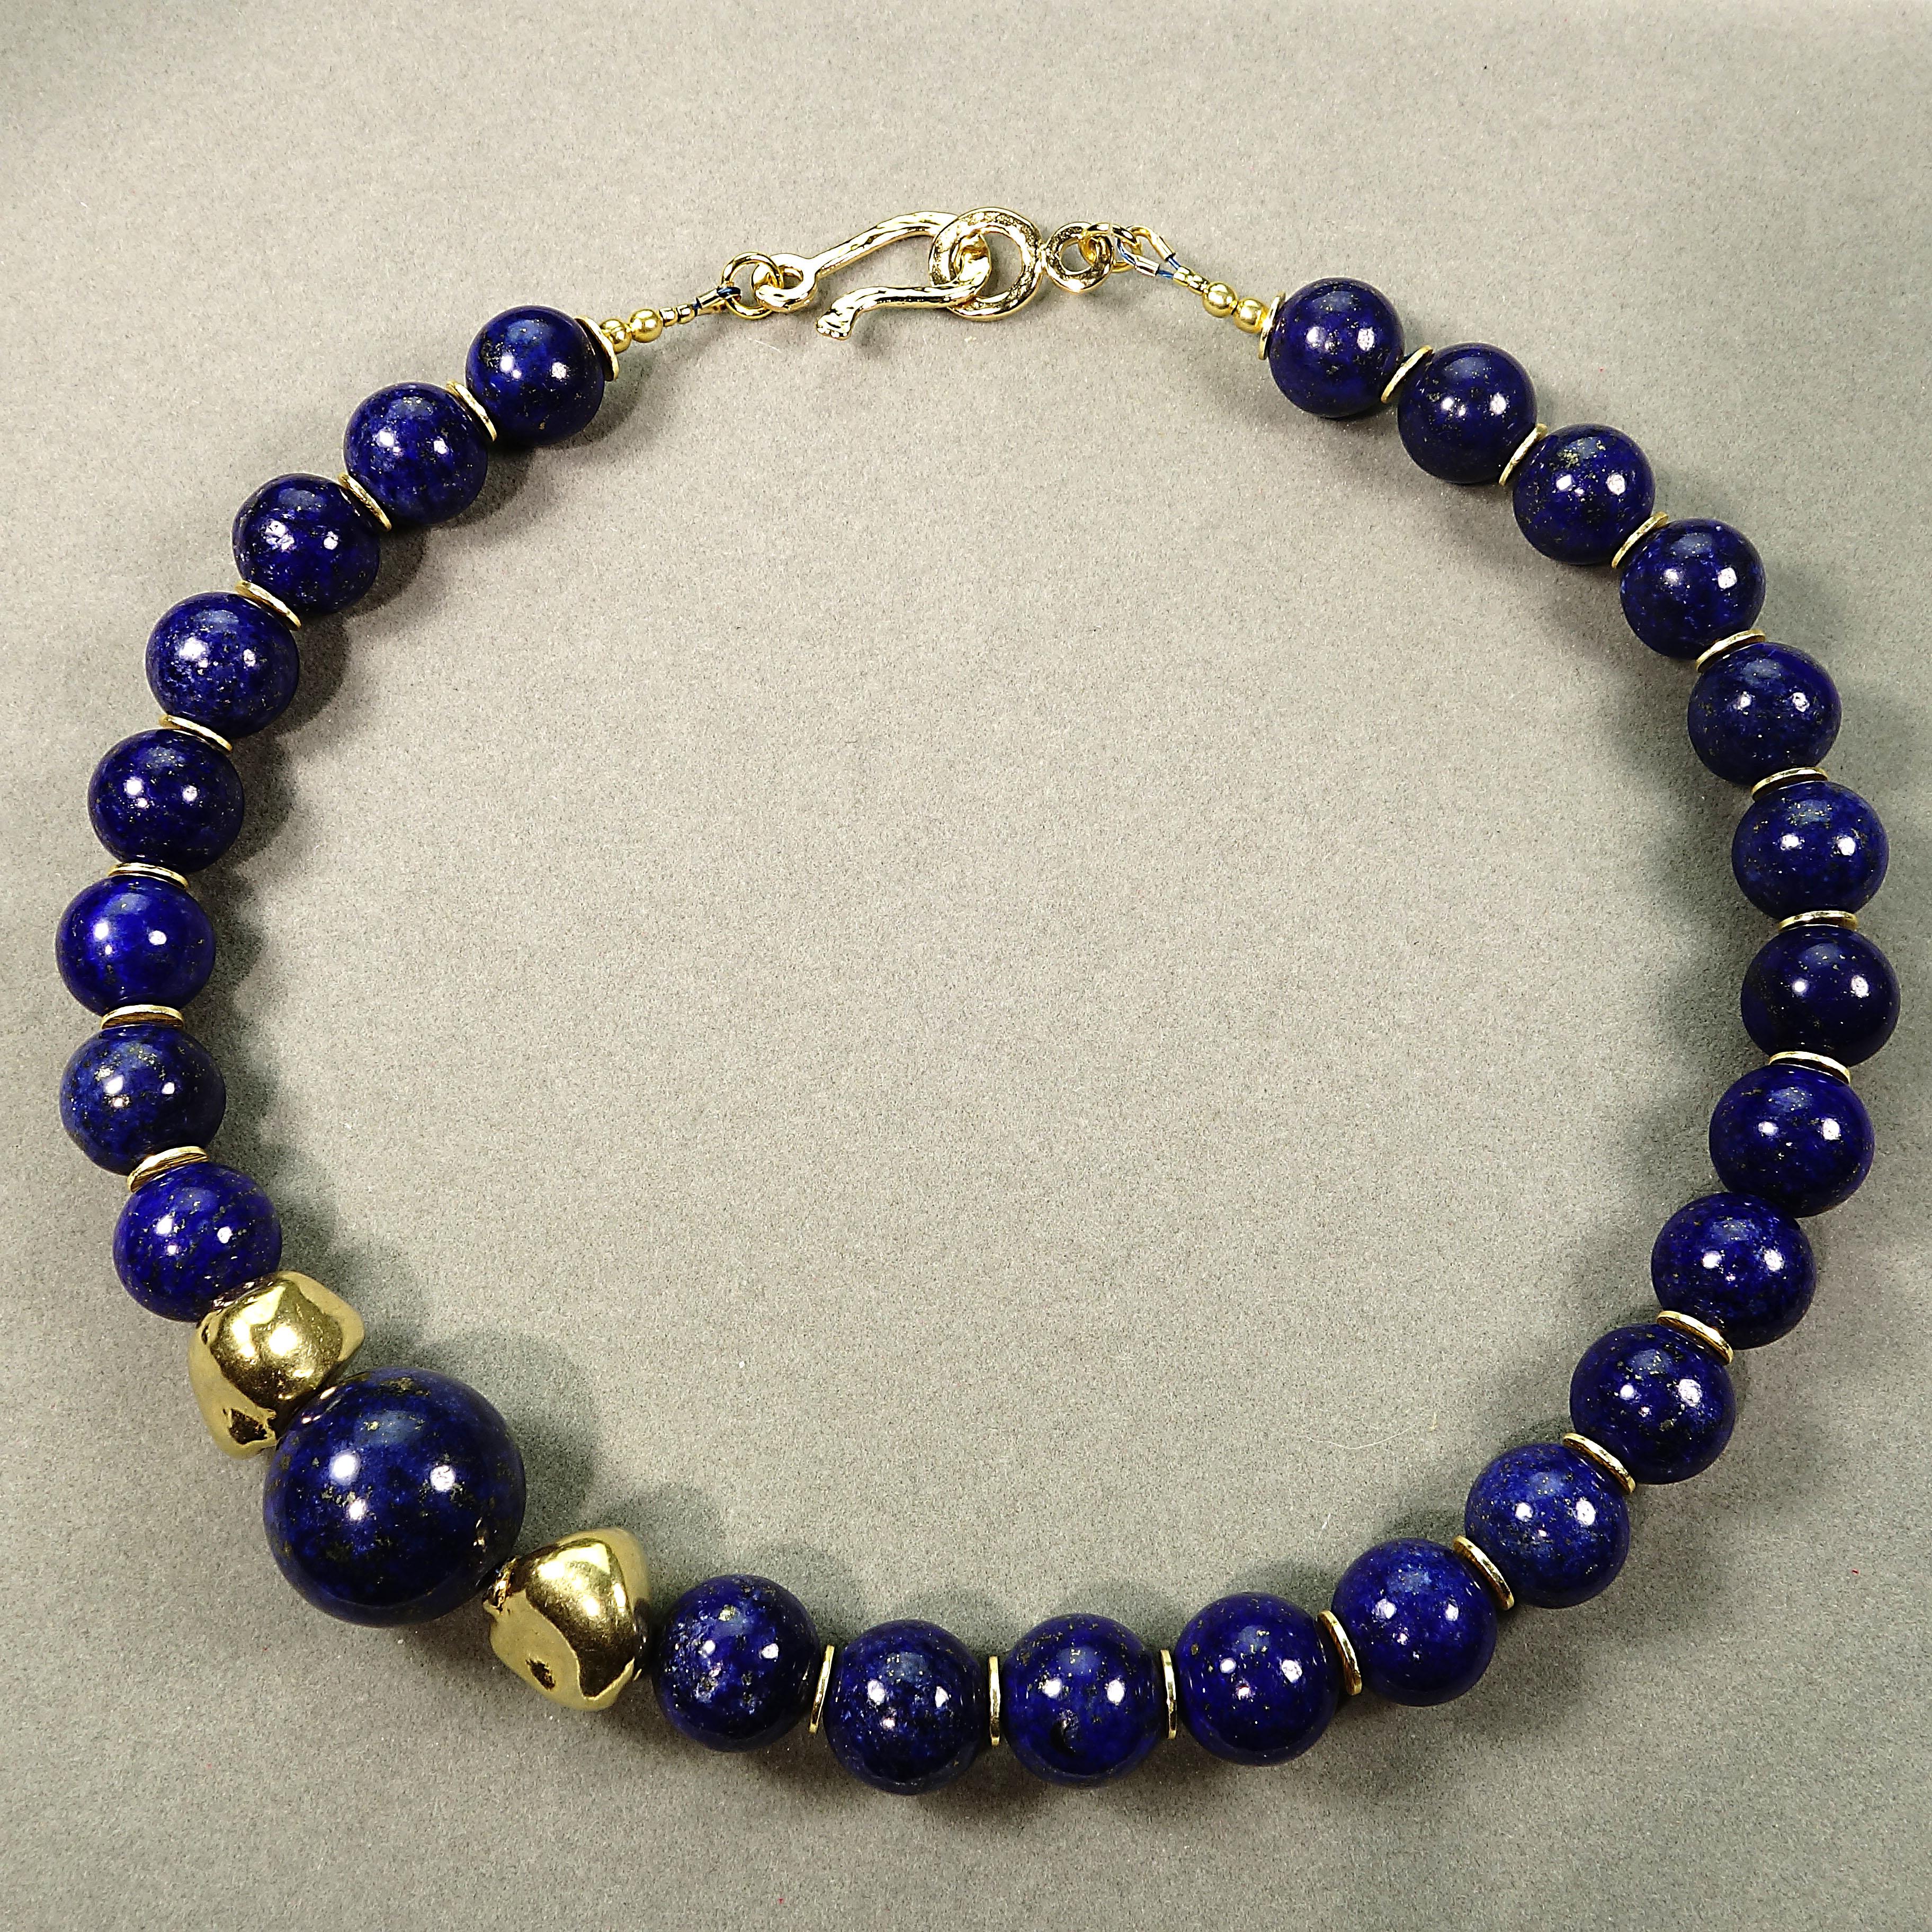  AJD 16 Inch elegant Lapis Lazuli Choker Necklace with Golden Nugget Focals 1